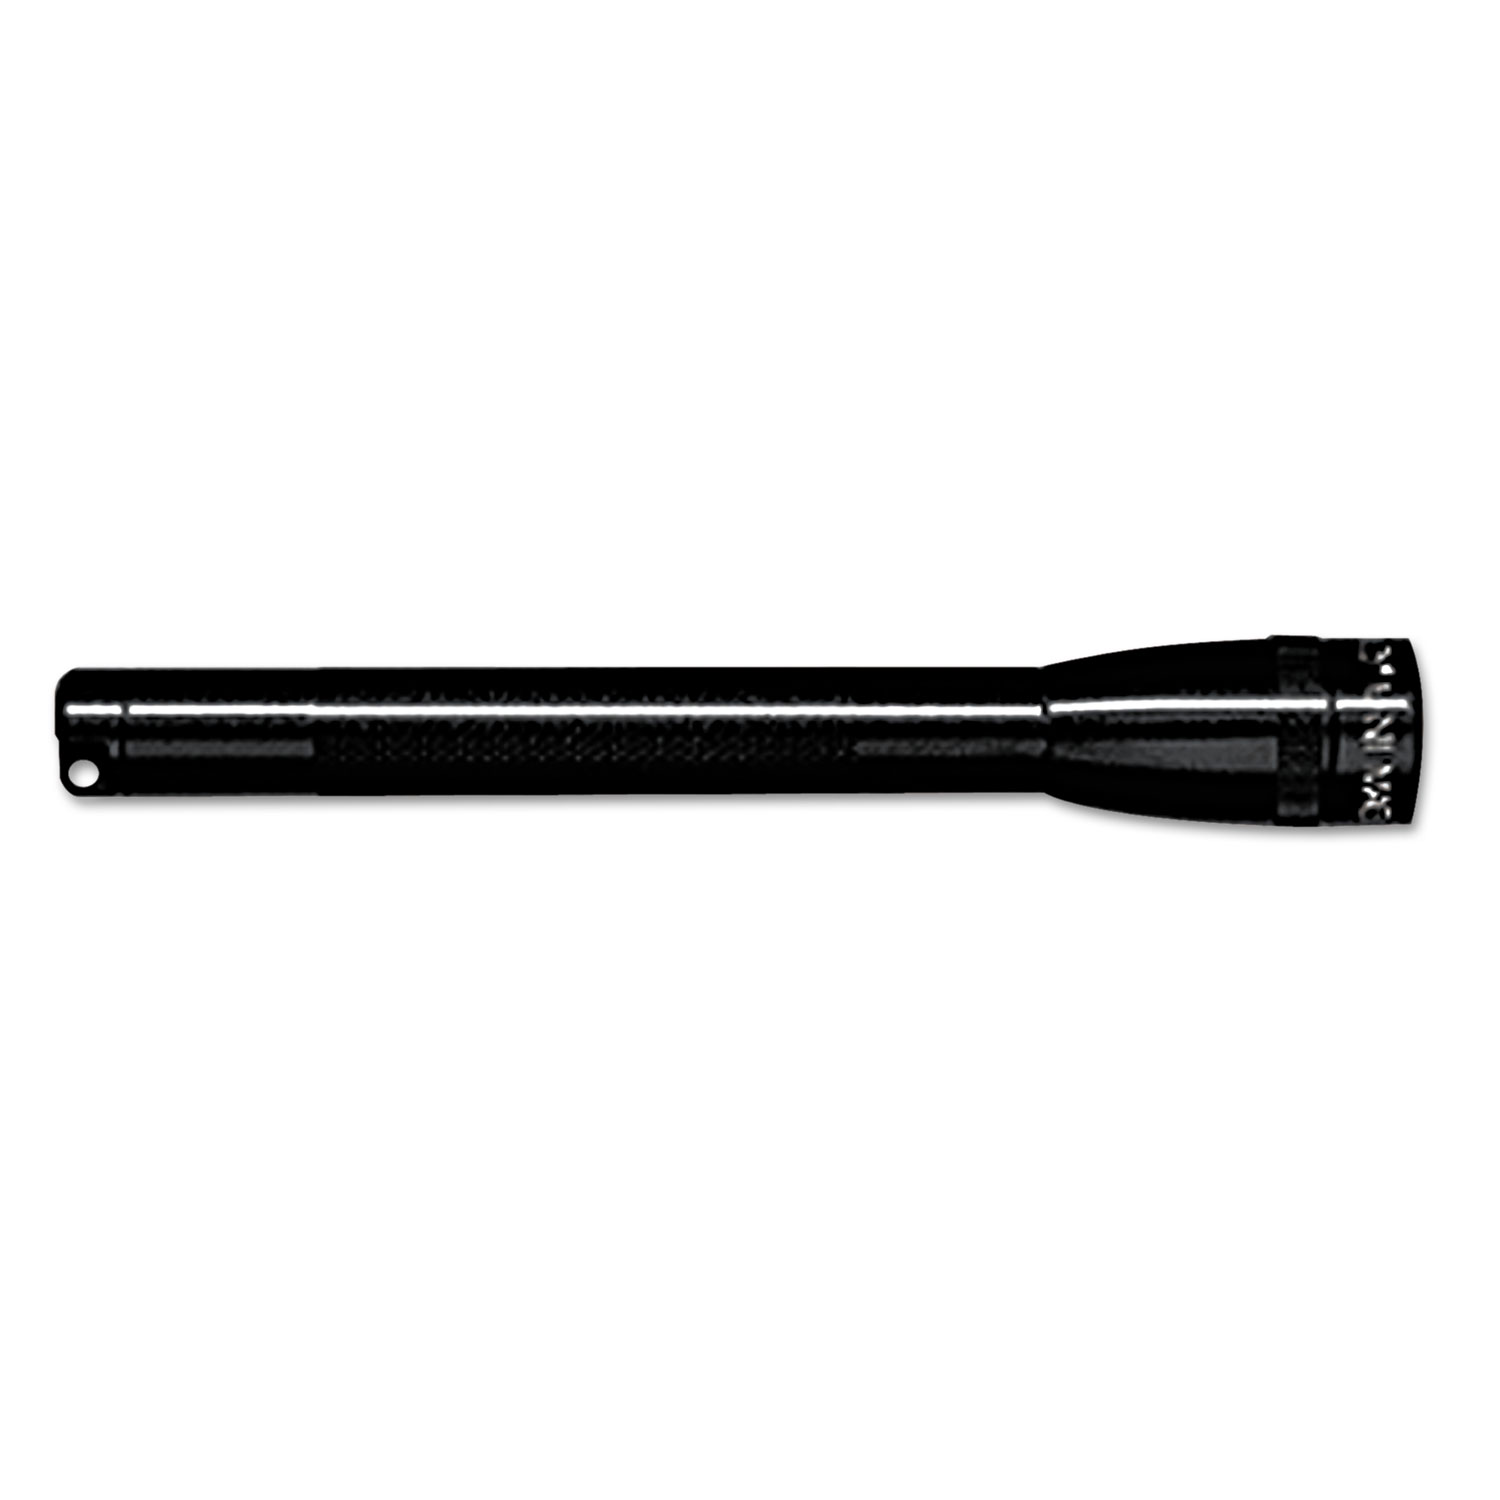  Maglite M3A012 Mini Maglite AAA Flashlight, 2 AAA Batteries (Included), Black, Combo Pack (MGLM3A012) 